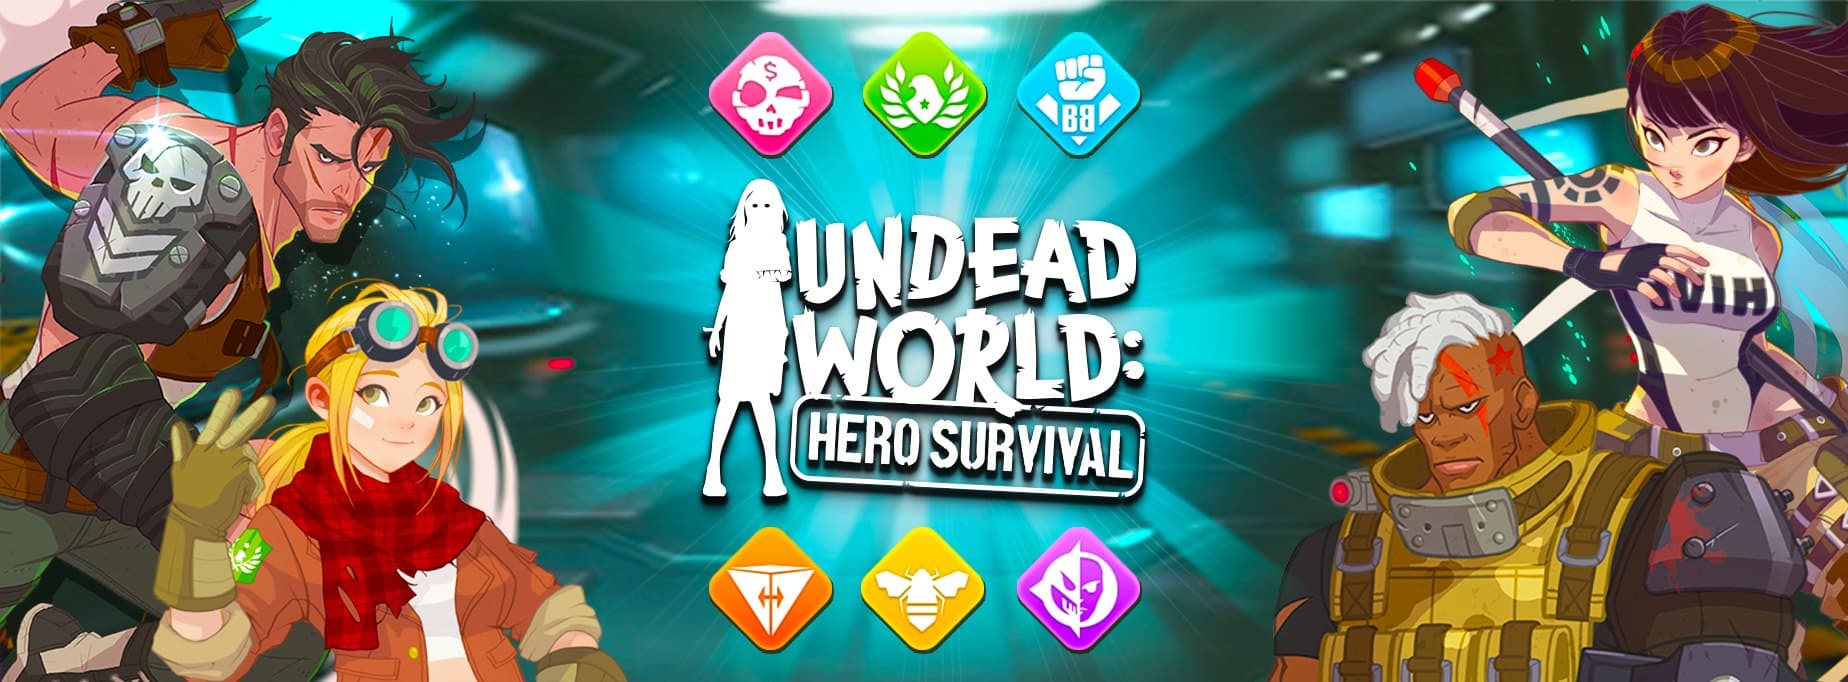 Survival Games Ultimate Codes 2023 (December) Get Free Gems!